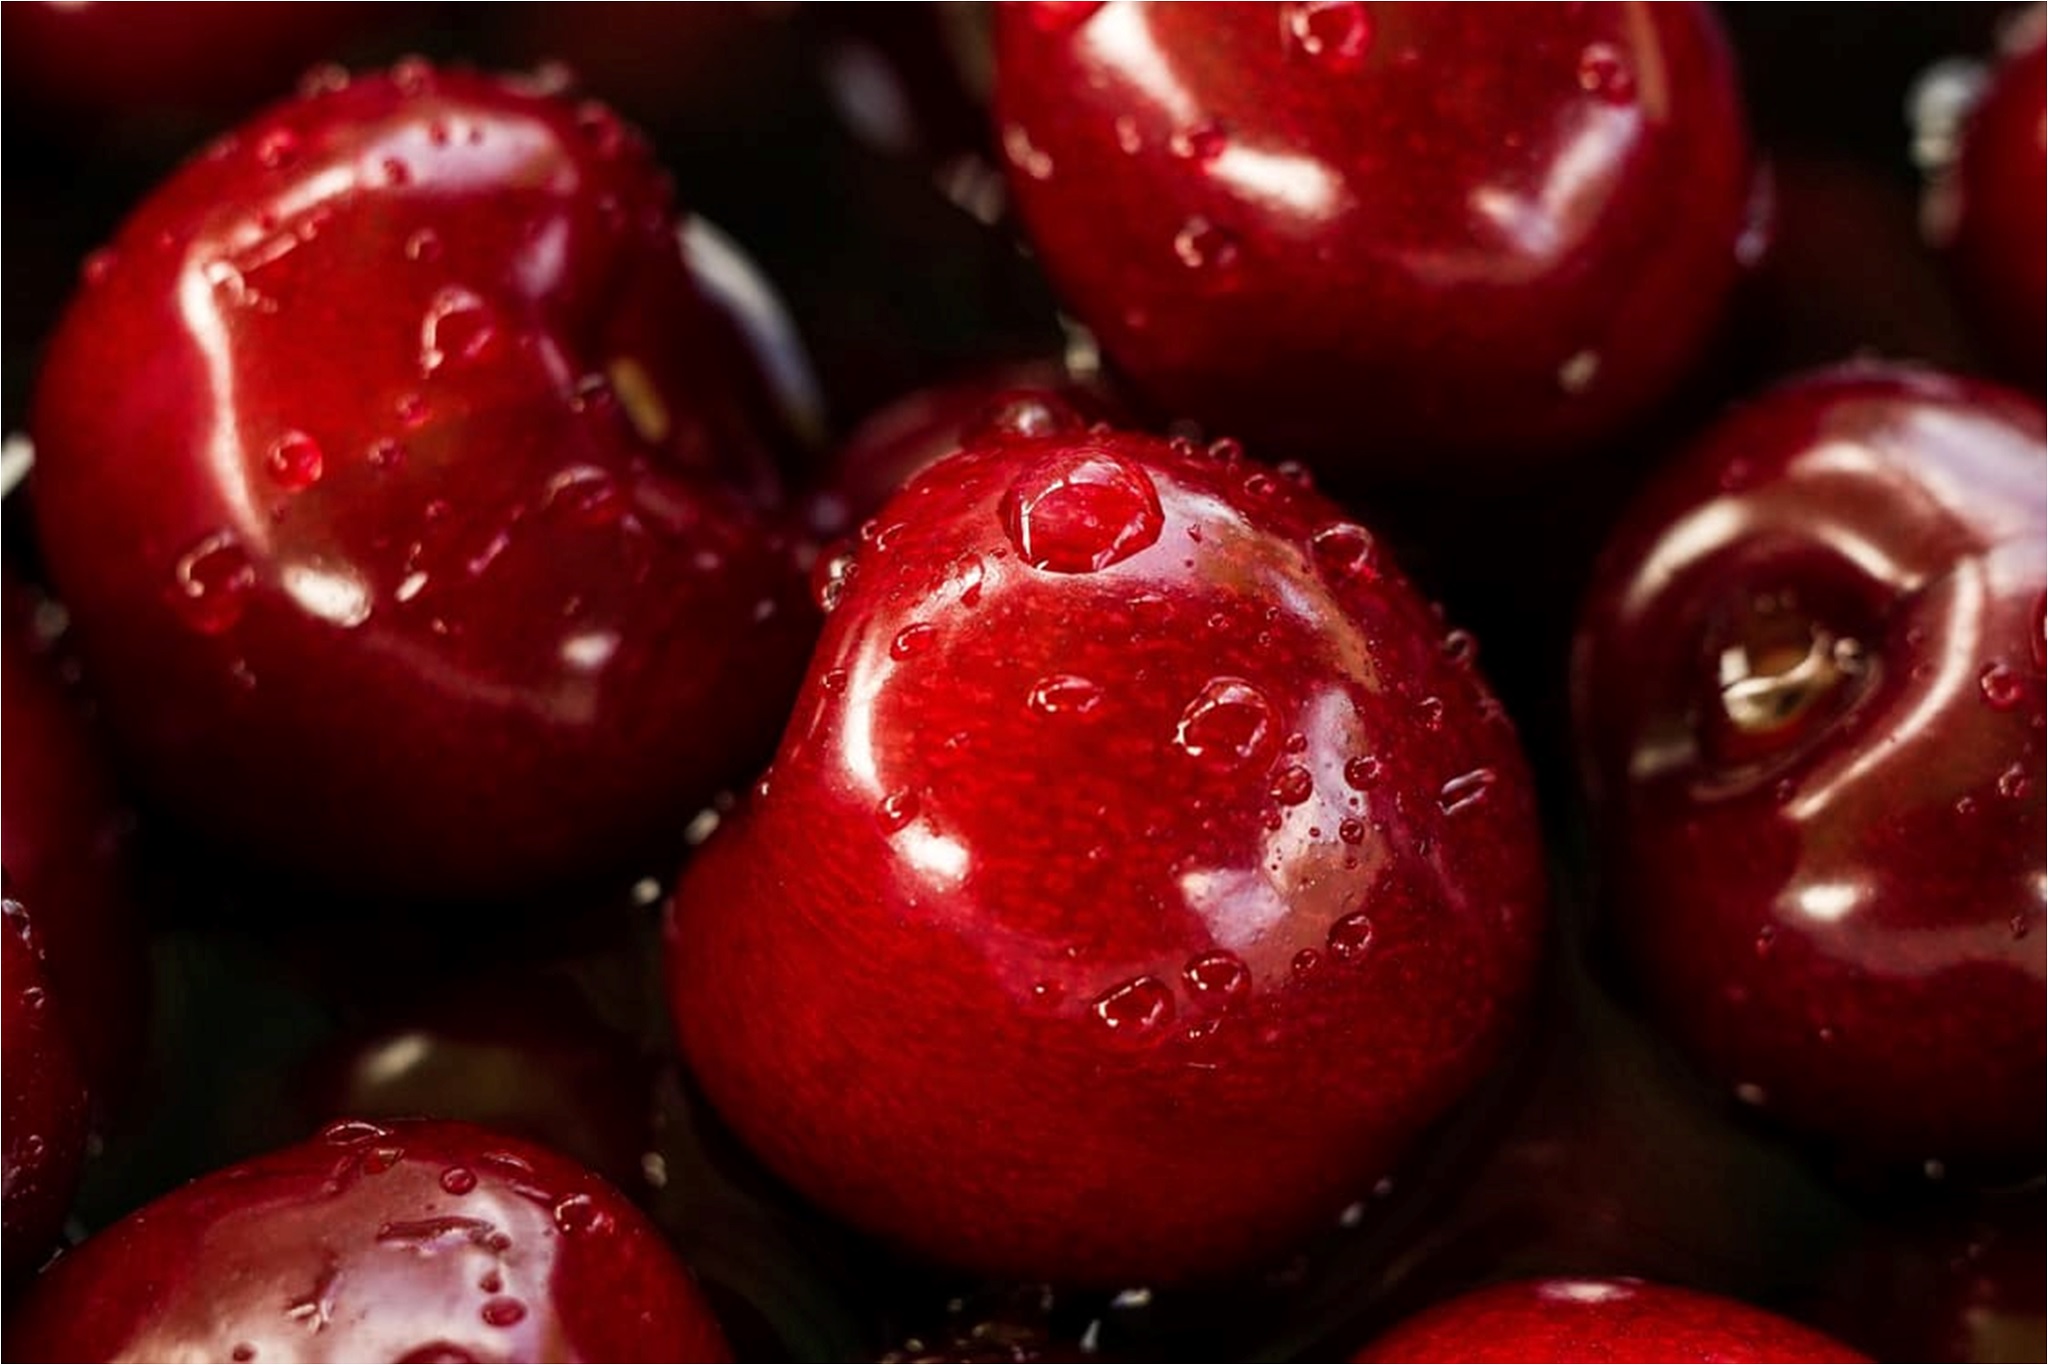 Cherries with Drops of Water - Cherry Magical Properties - Elune Blue (Hero)